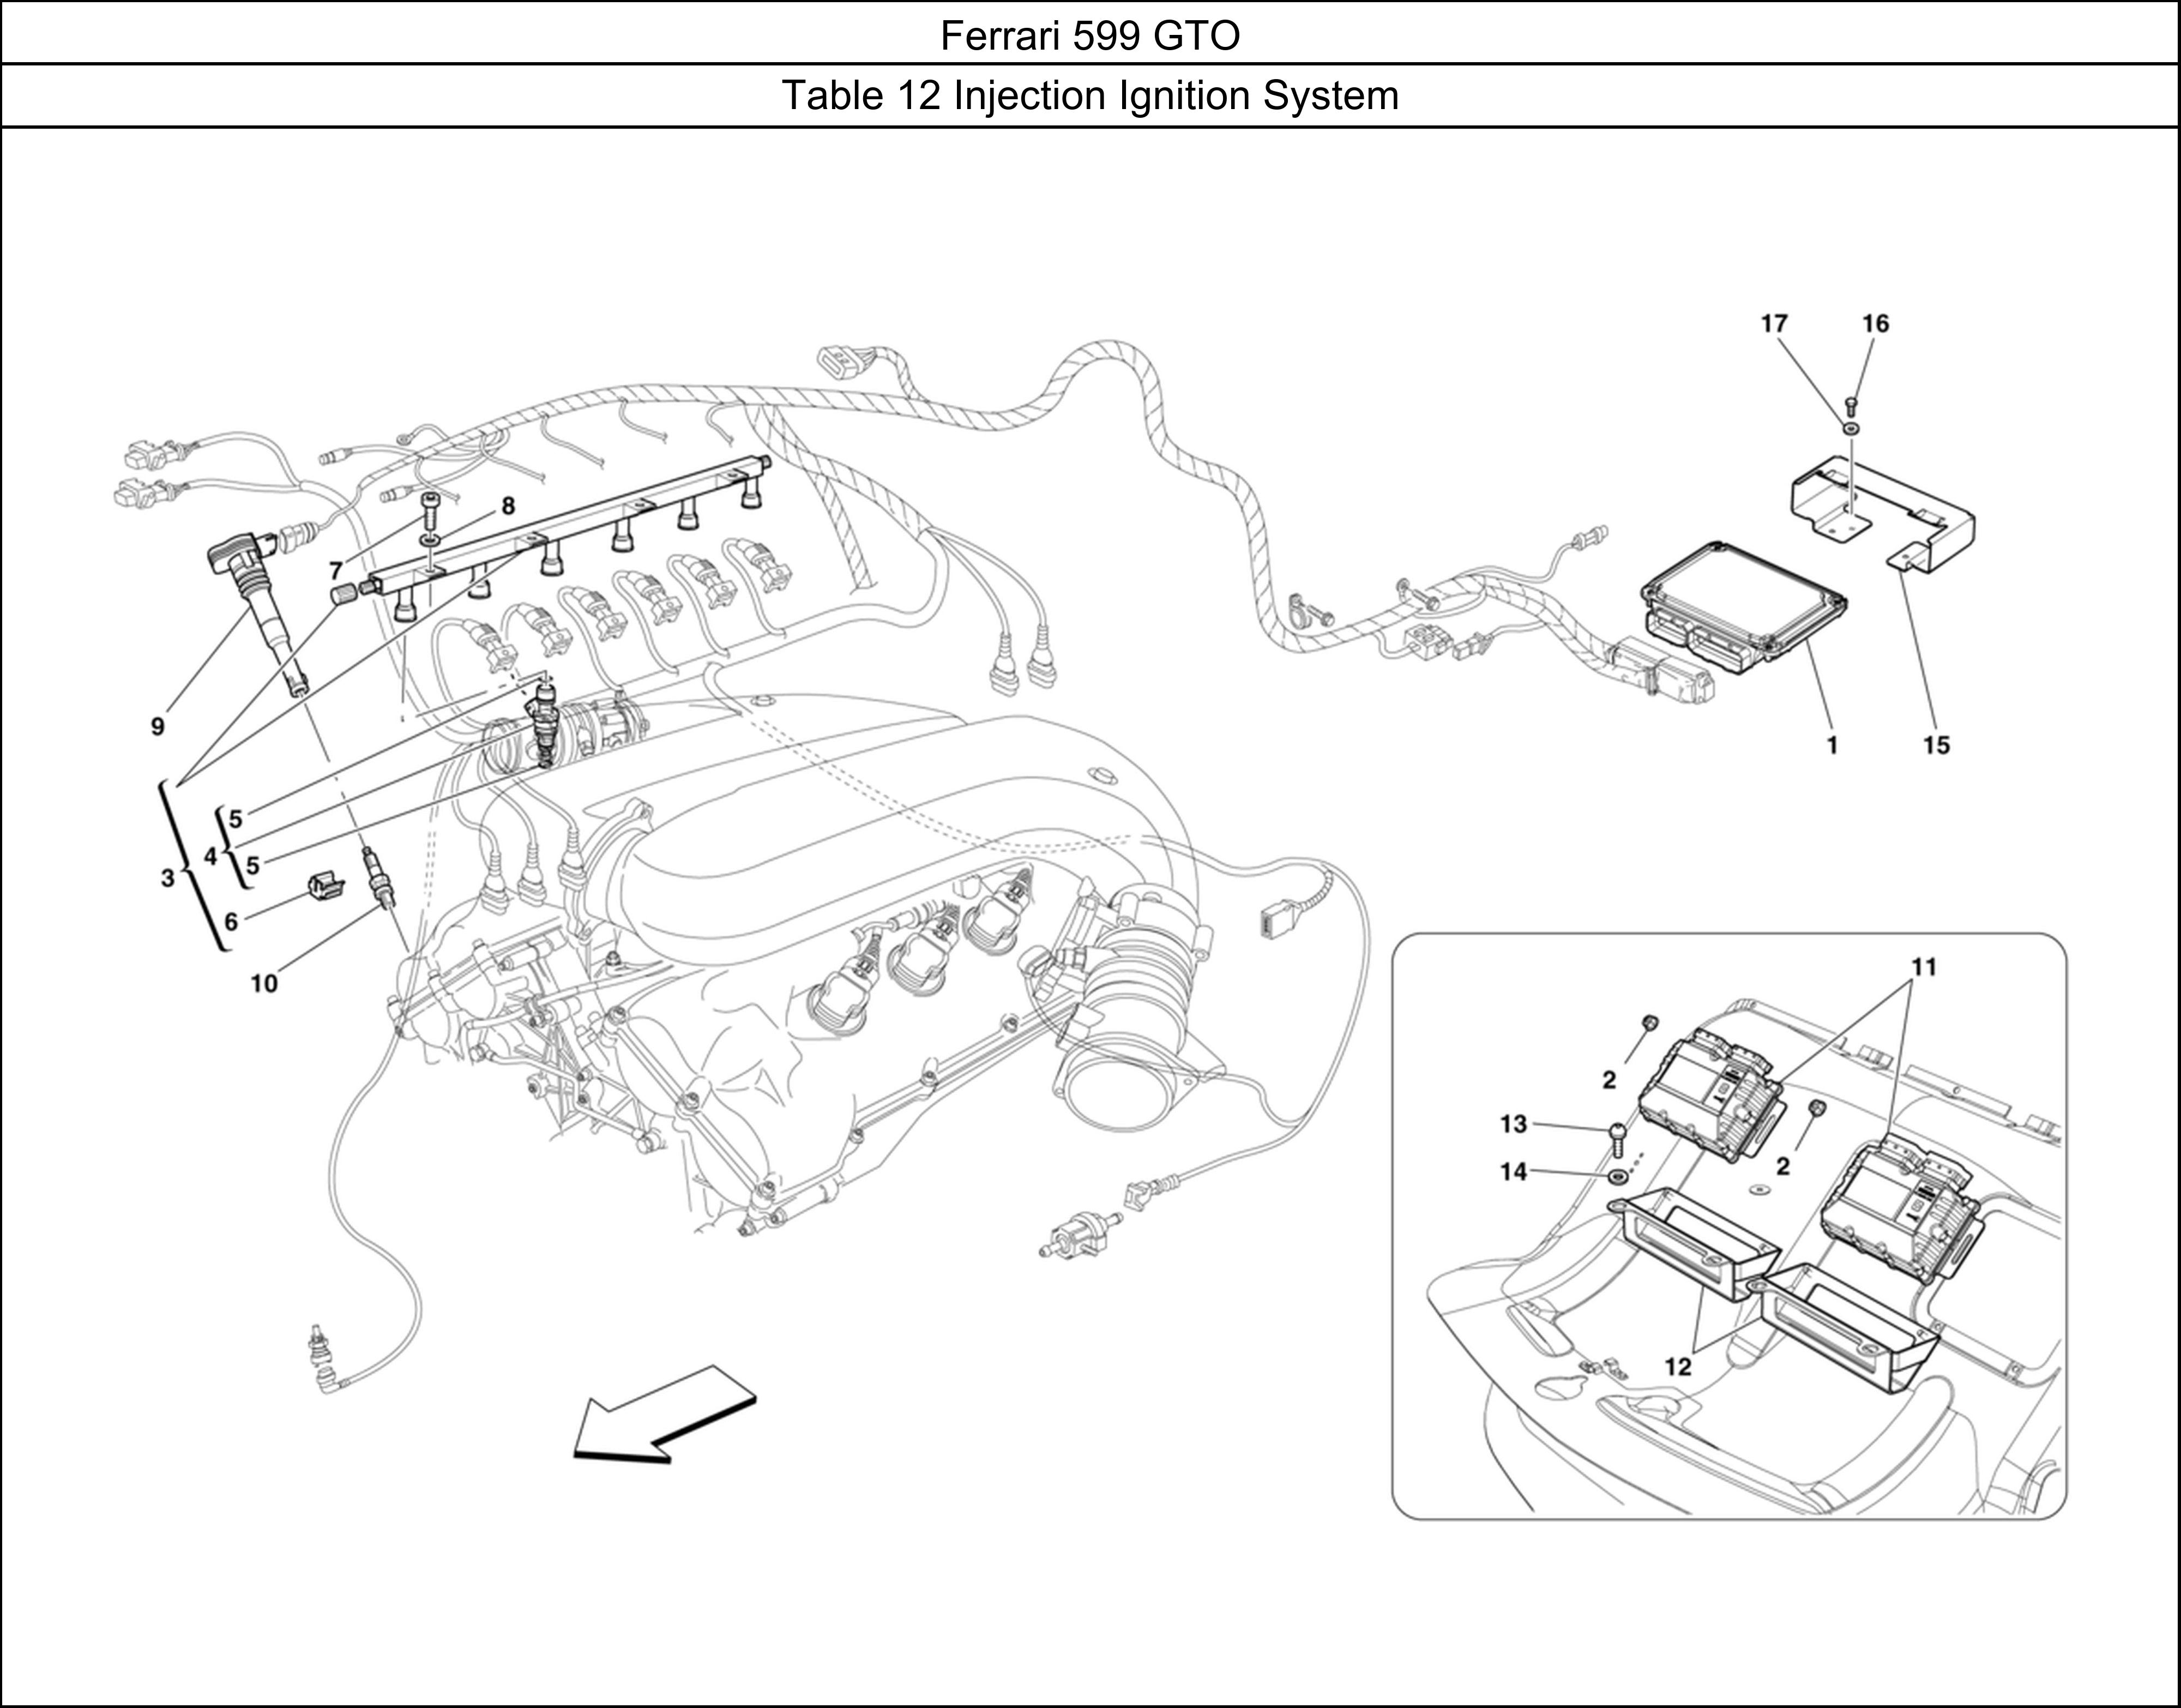 Ferrari Parts Ferrari 599 GTO Table 12 Injection Ignition System